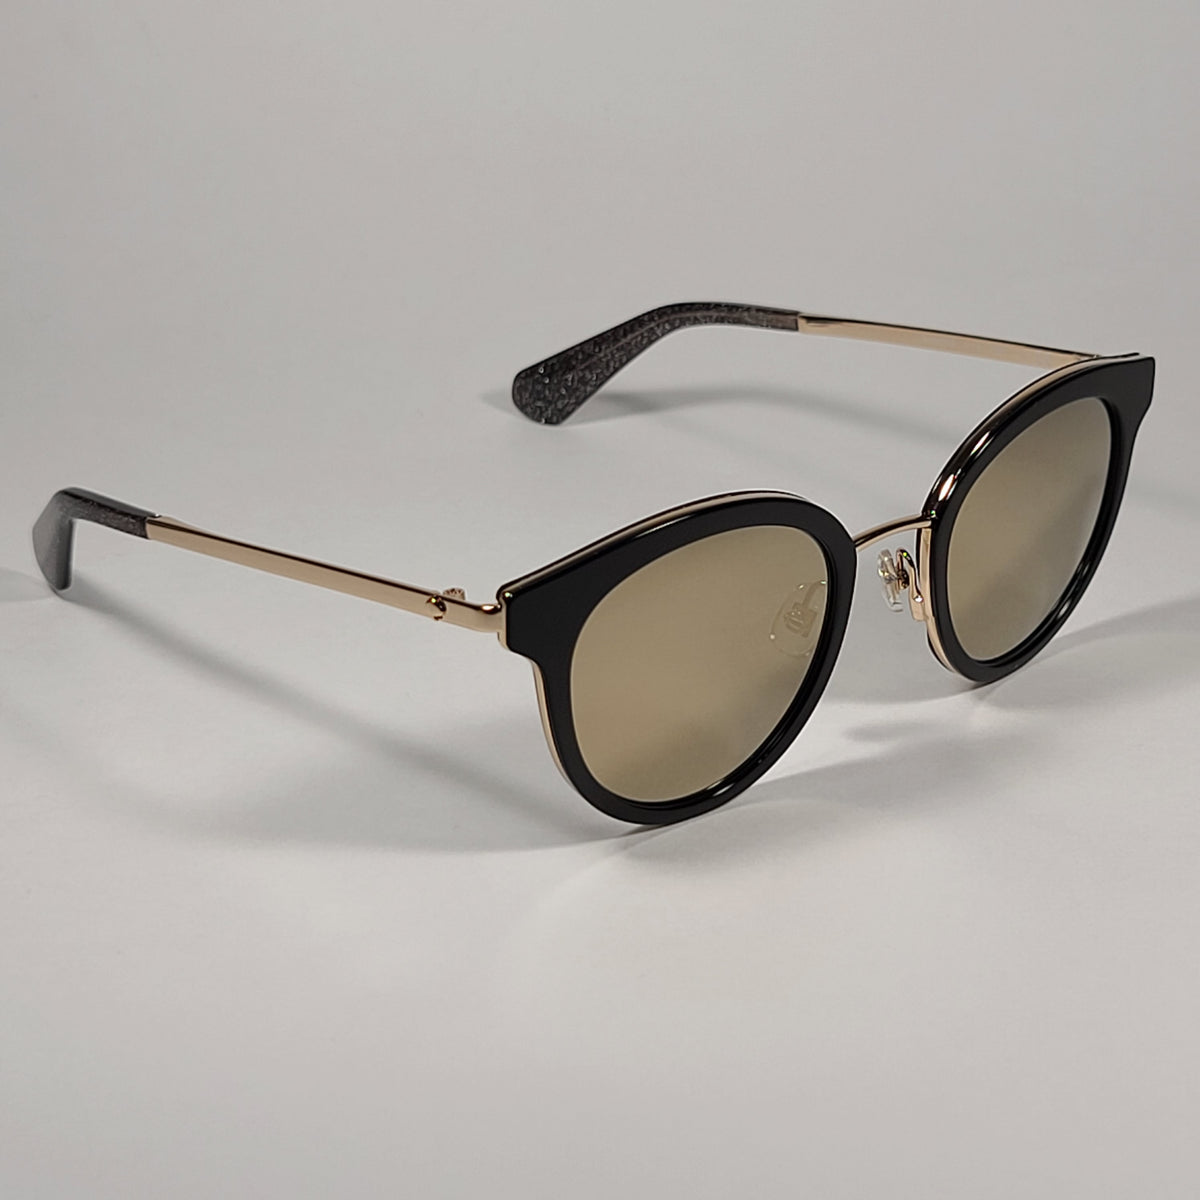 kom sammen Tilbageholde Ærlighed Kate Spade LISANNE/F/S 807UE Round Sunglasses Gold Black Glitter Frame